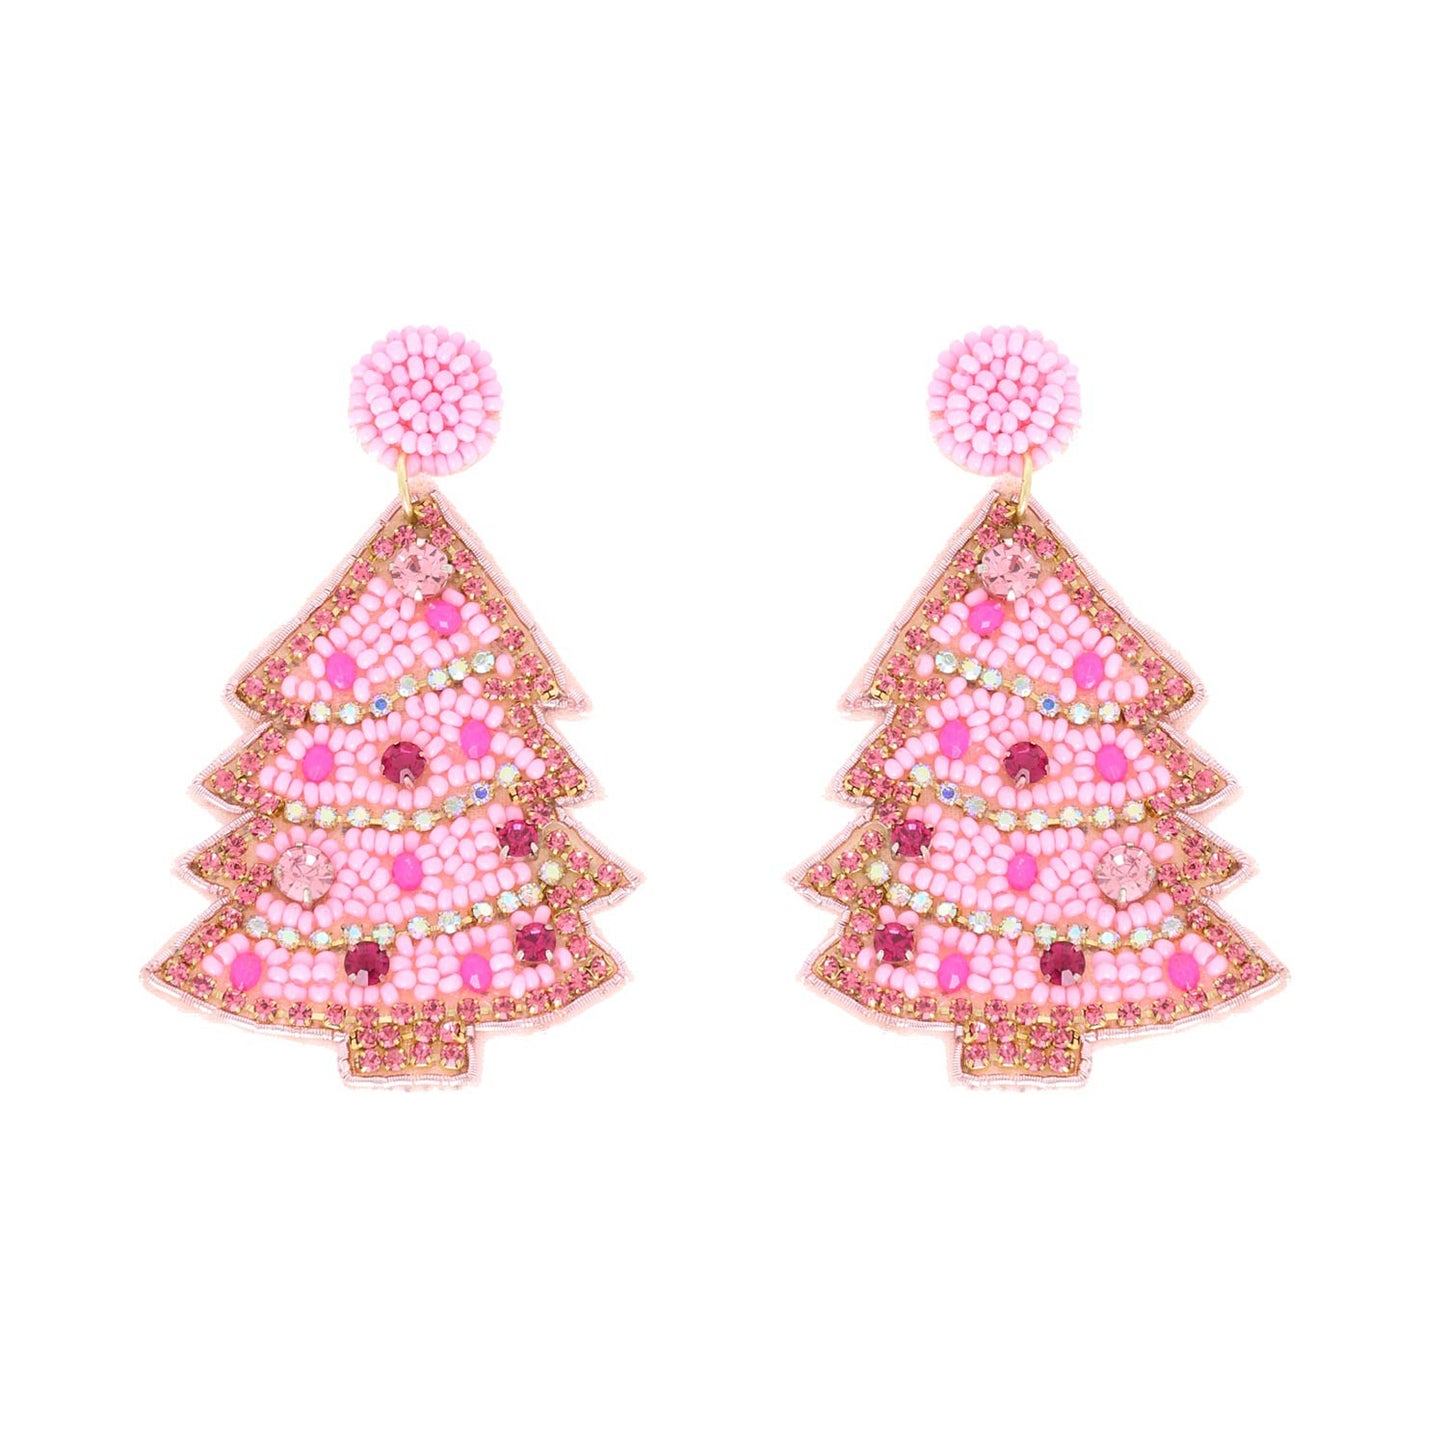 Jeweled Beaded Christmas Tree Earrings